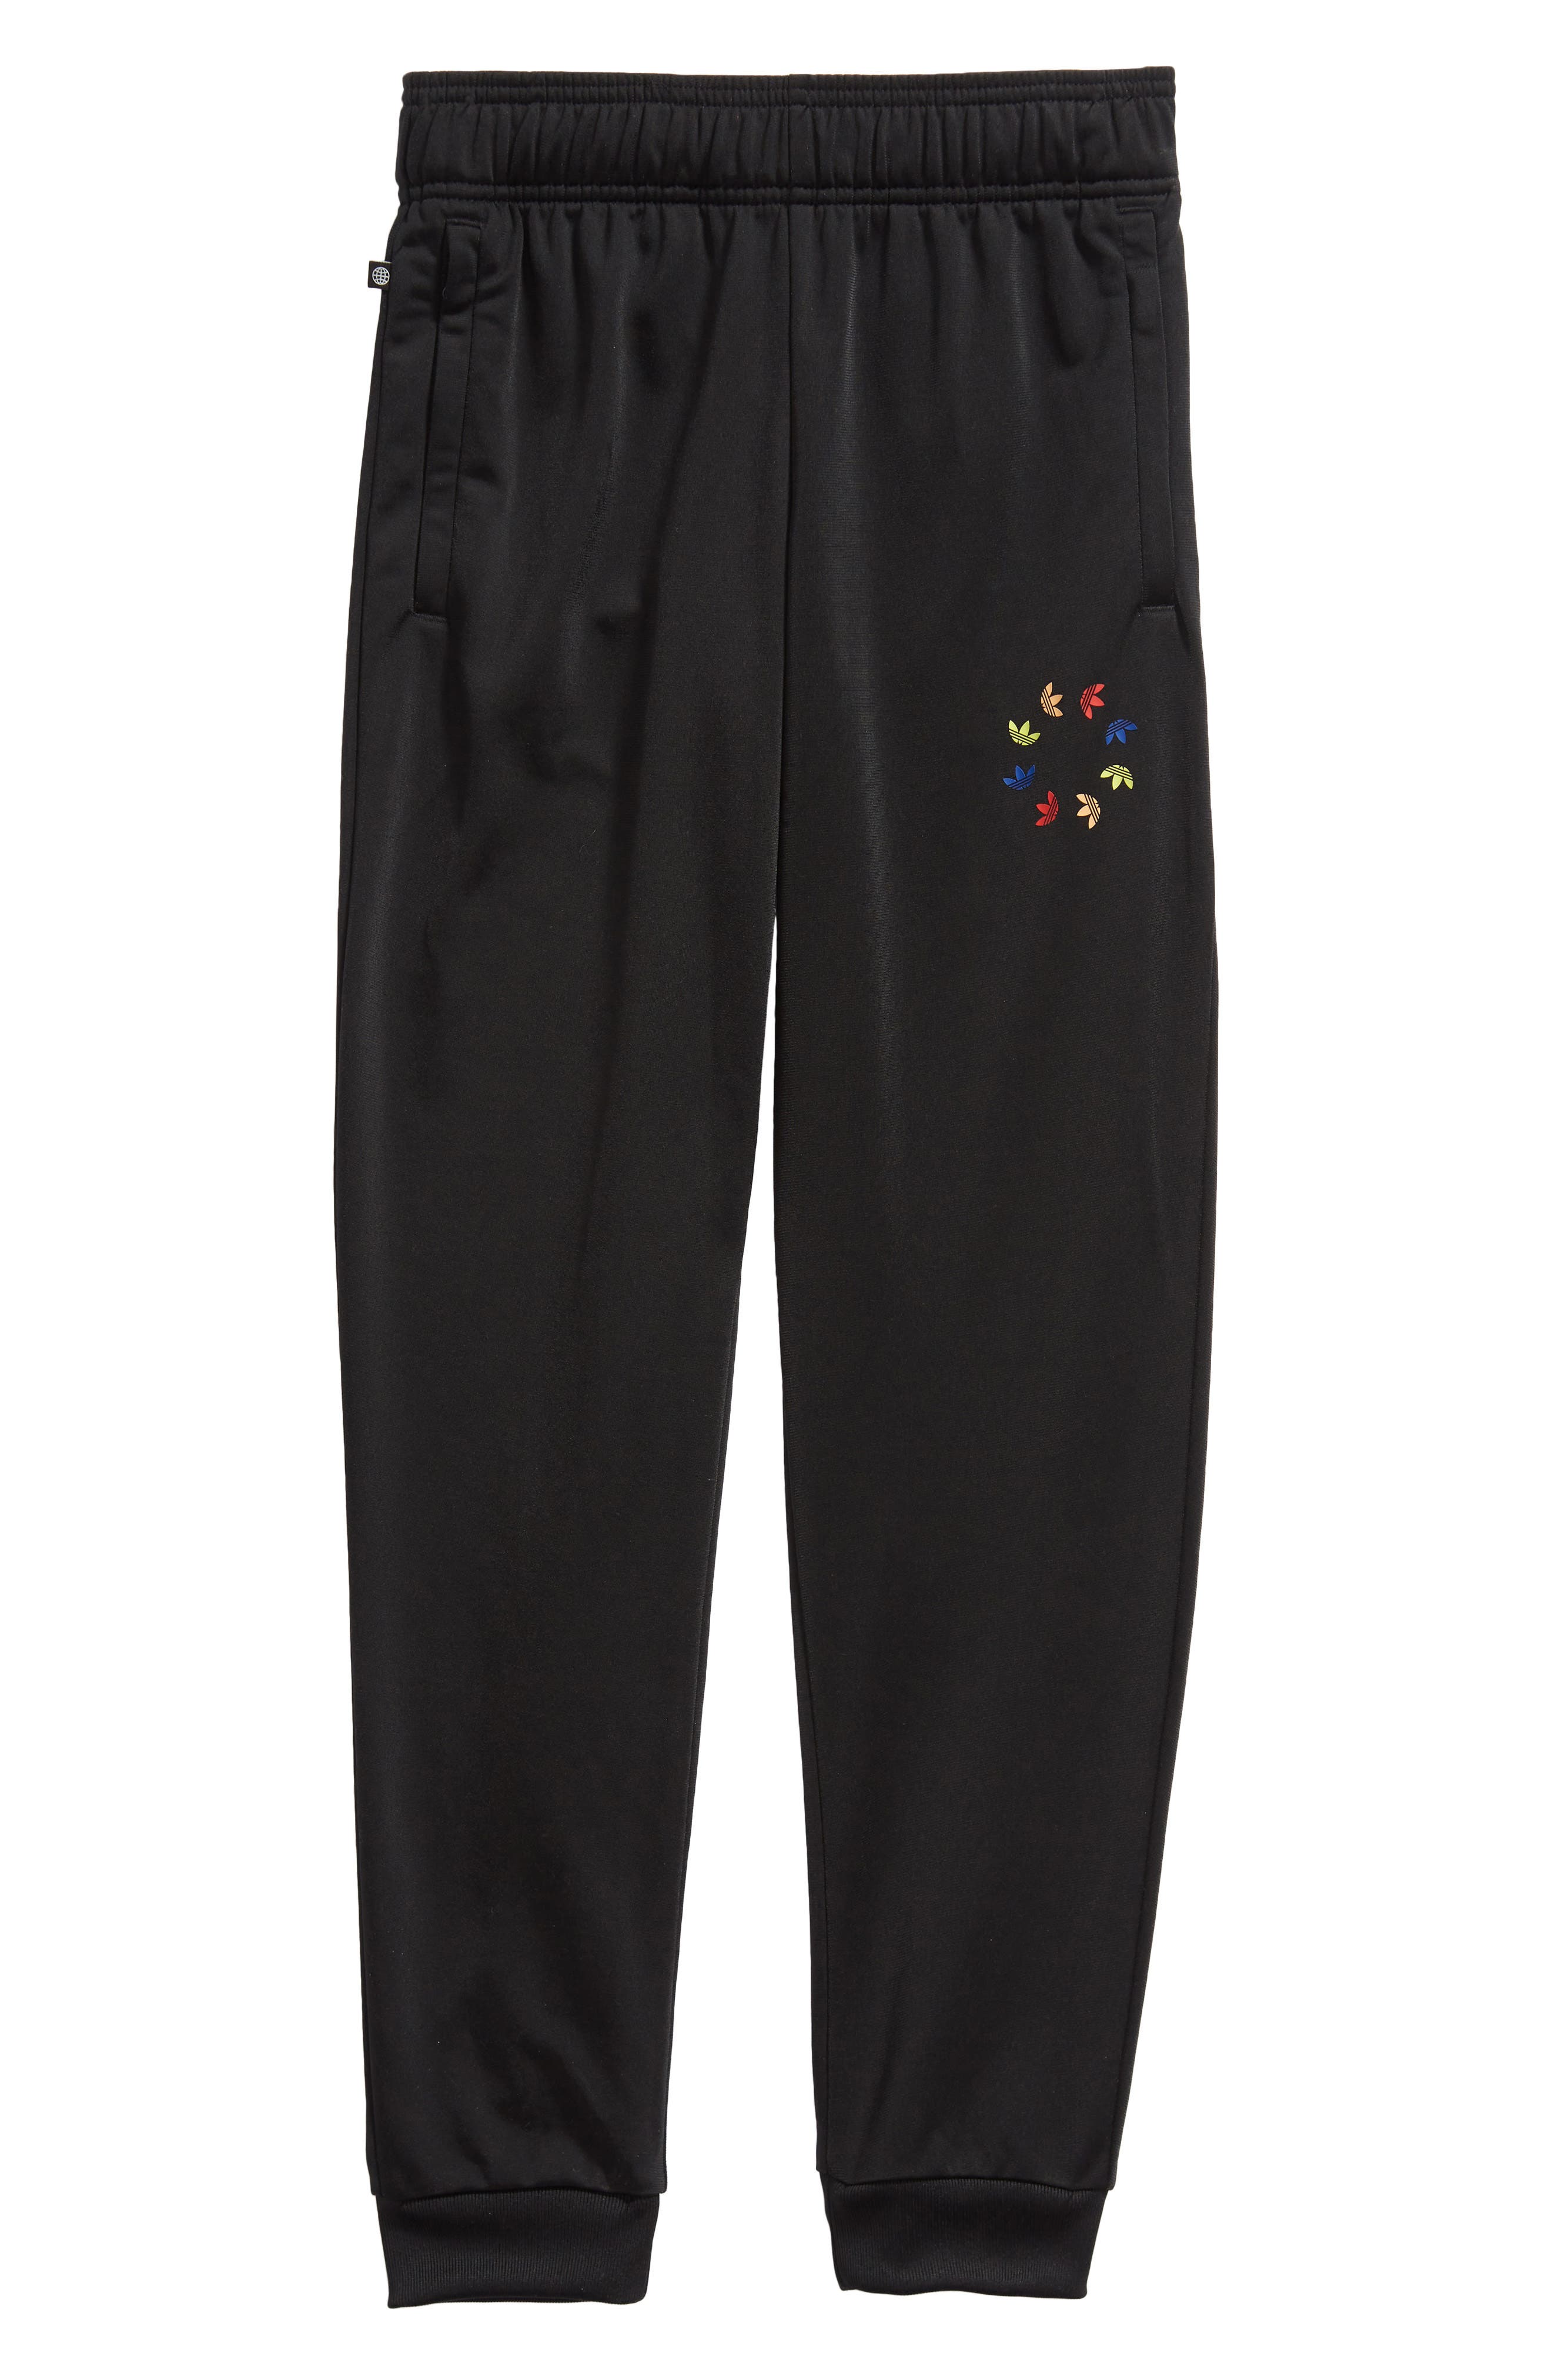 Pineapple Colorful Boys Sweatpants Boys Athletic Pants Youth Fleece Pants Black 